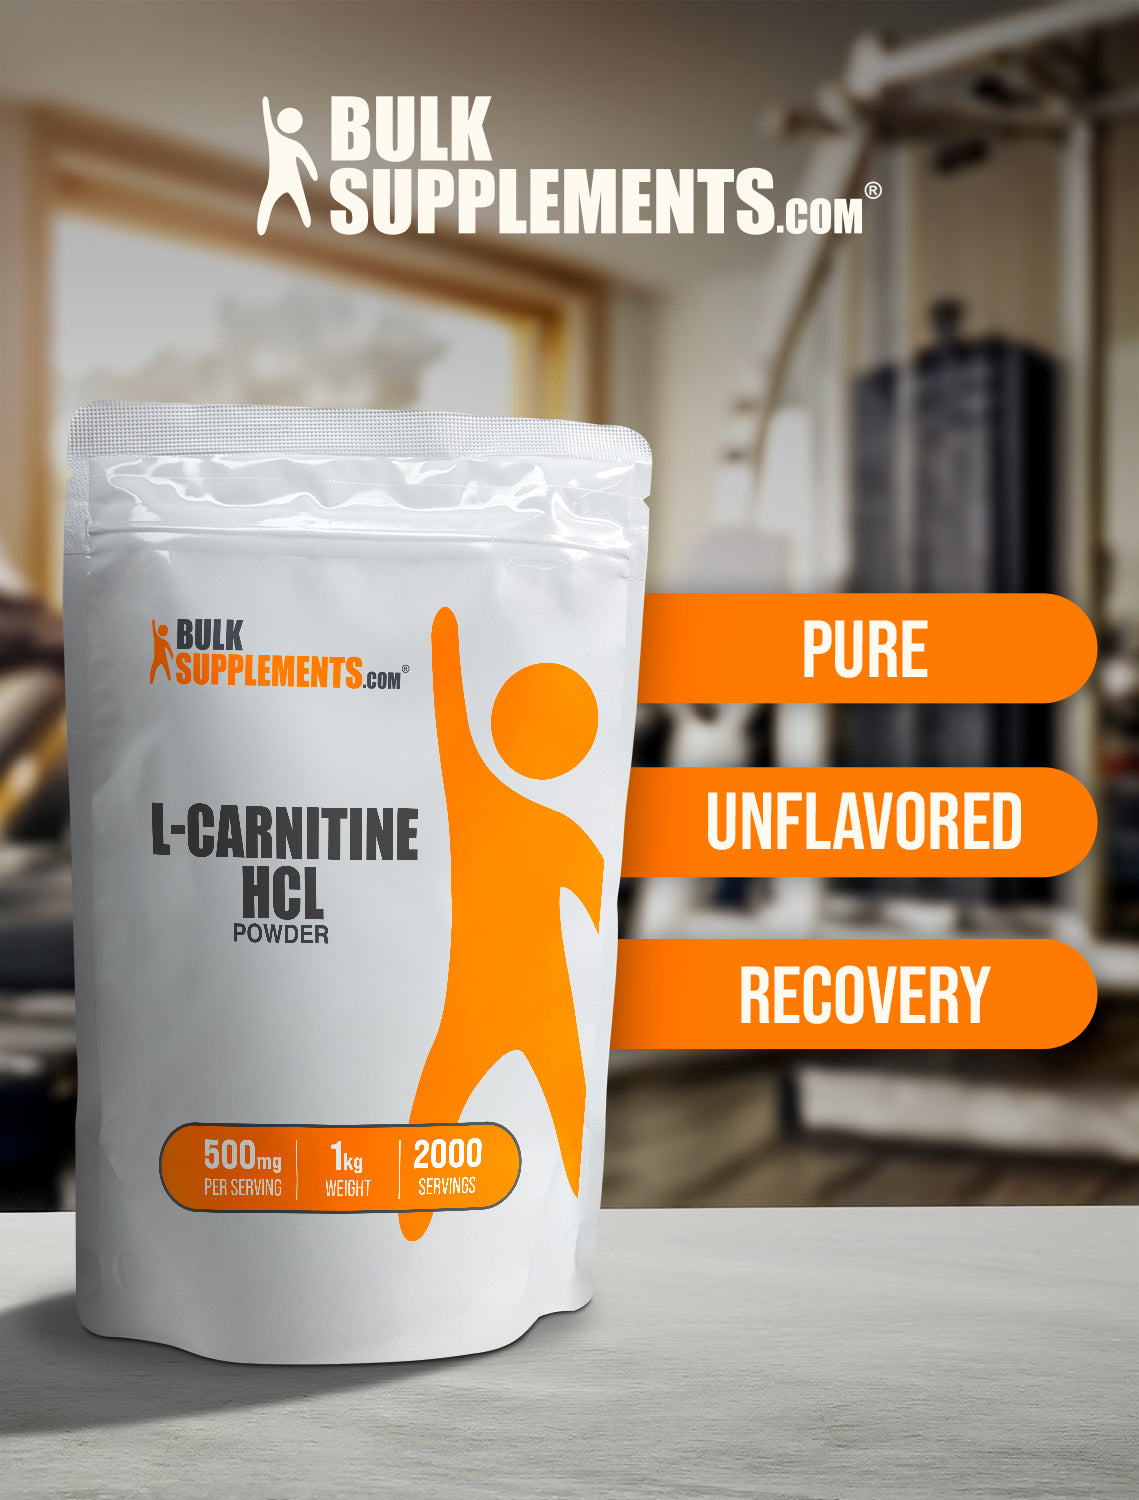 L-Carnitine HCl powder keyword image 1kg